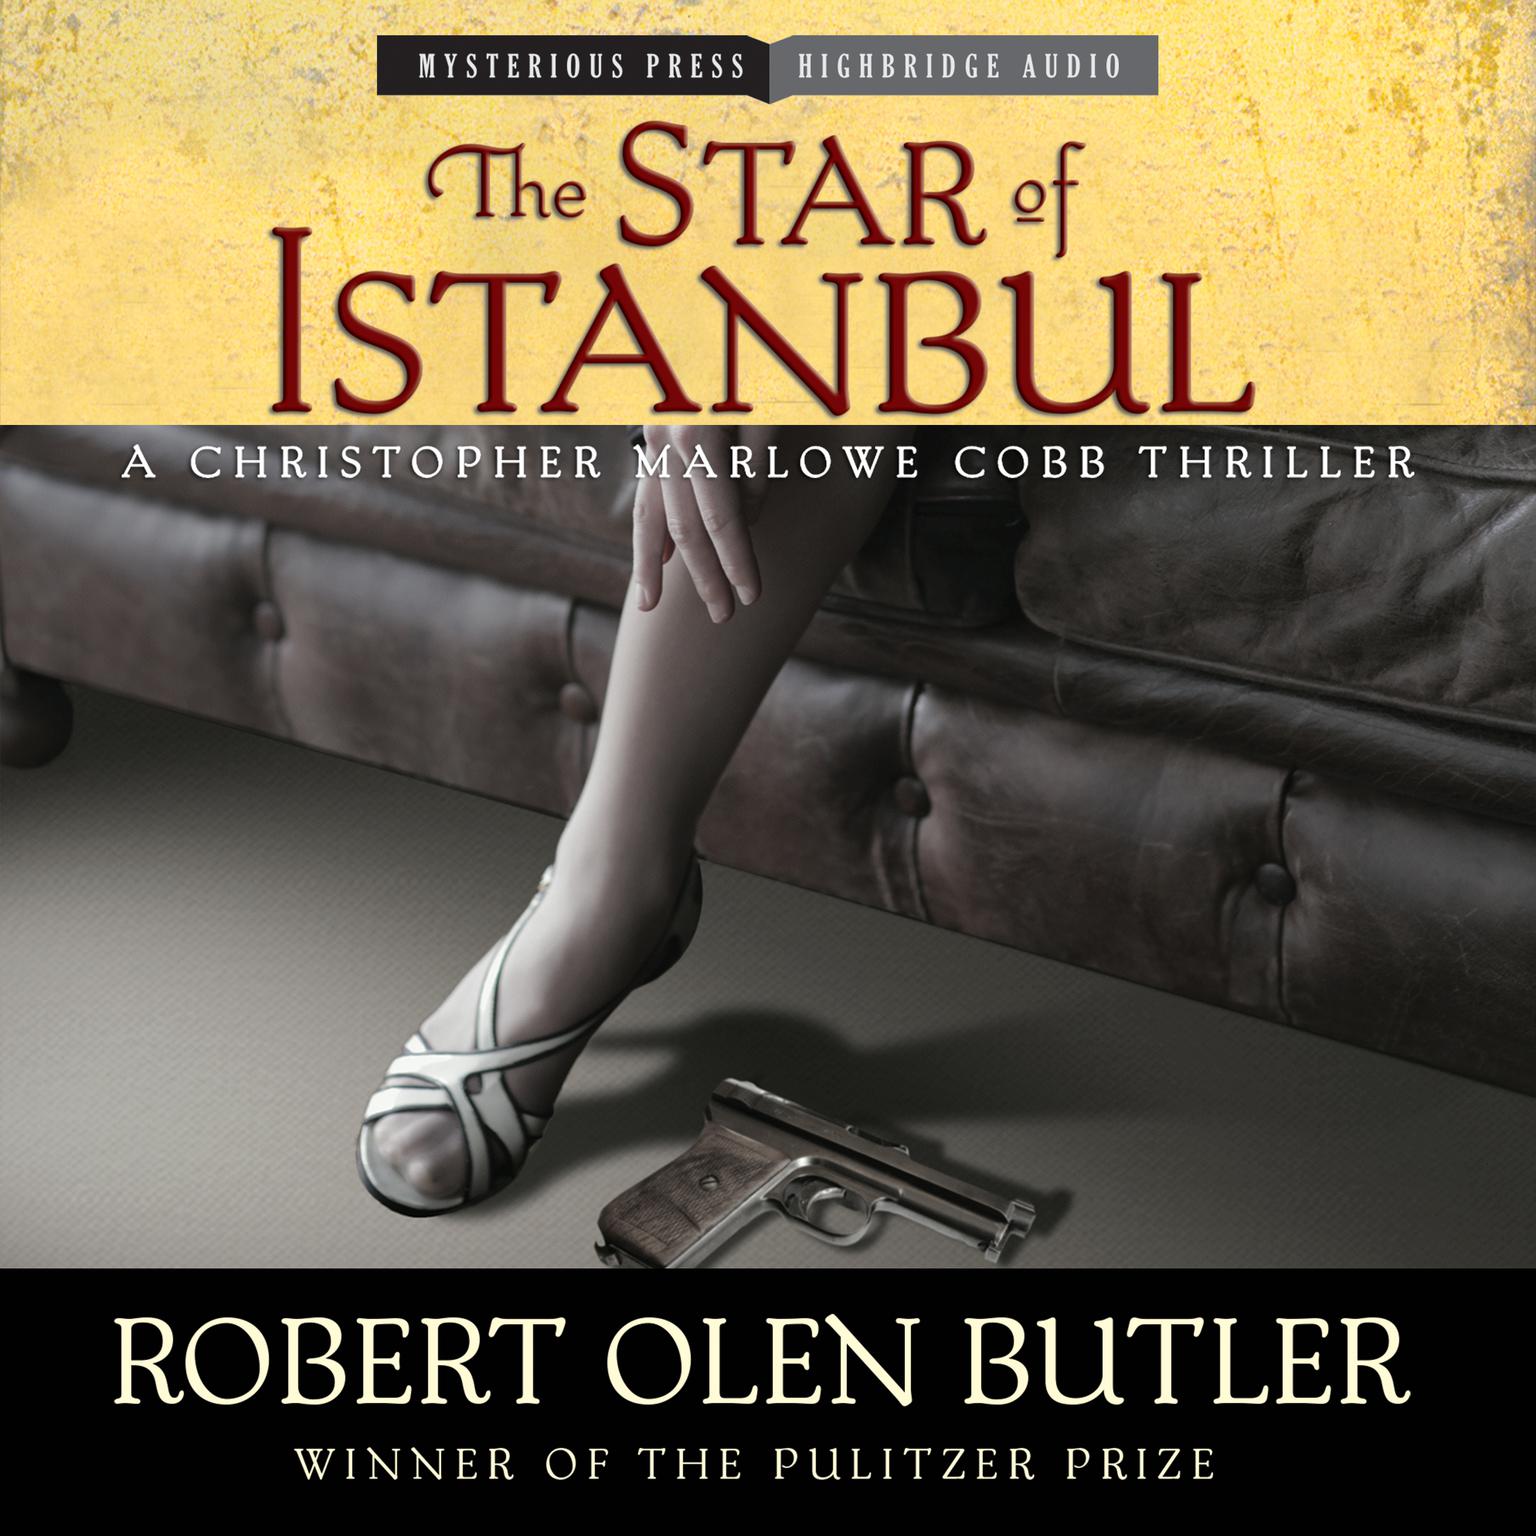 The Star of Istanbul: A Christopher Marlowe Cobb Thriller Audiobook, by Robert Olen Butler